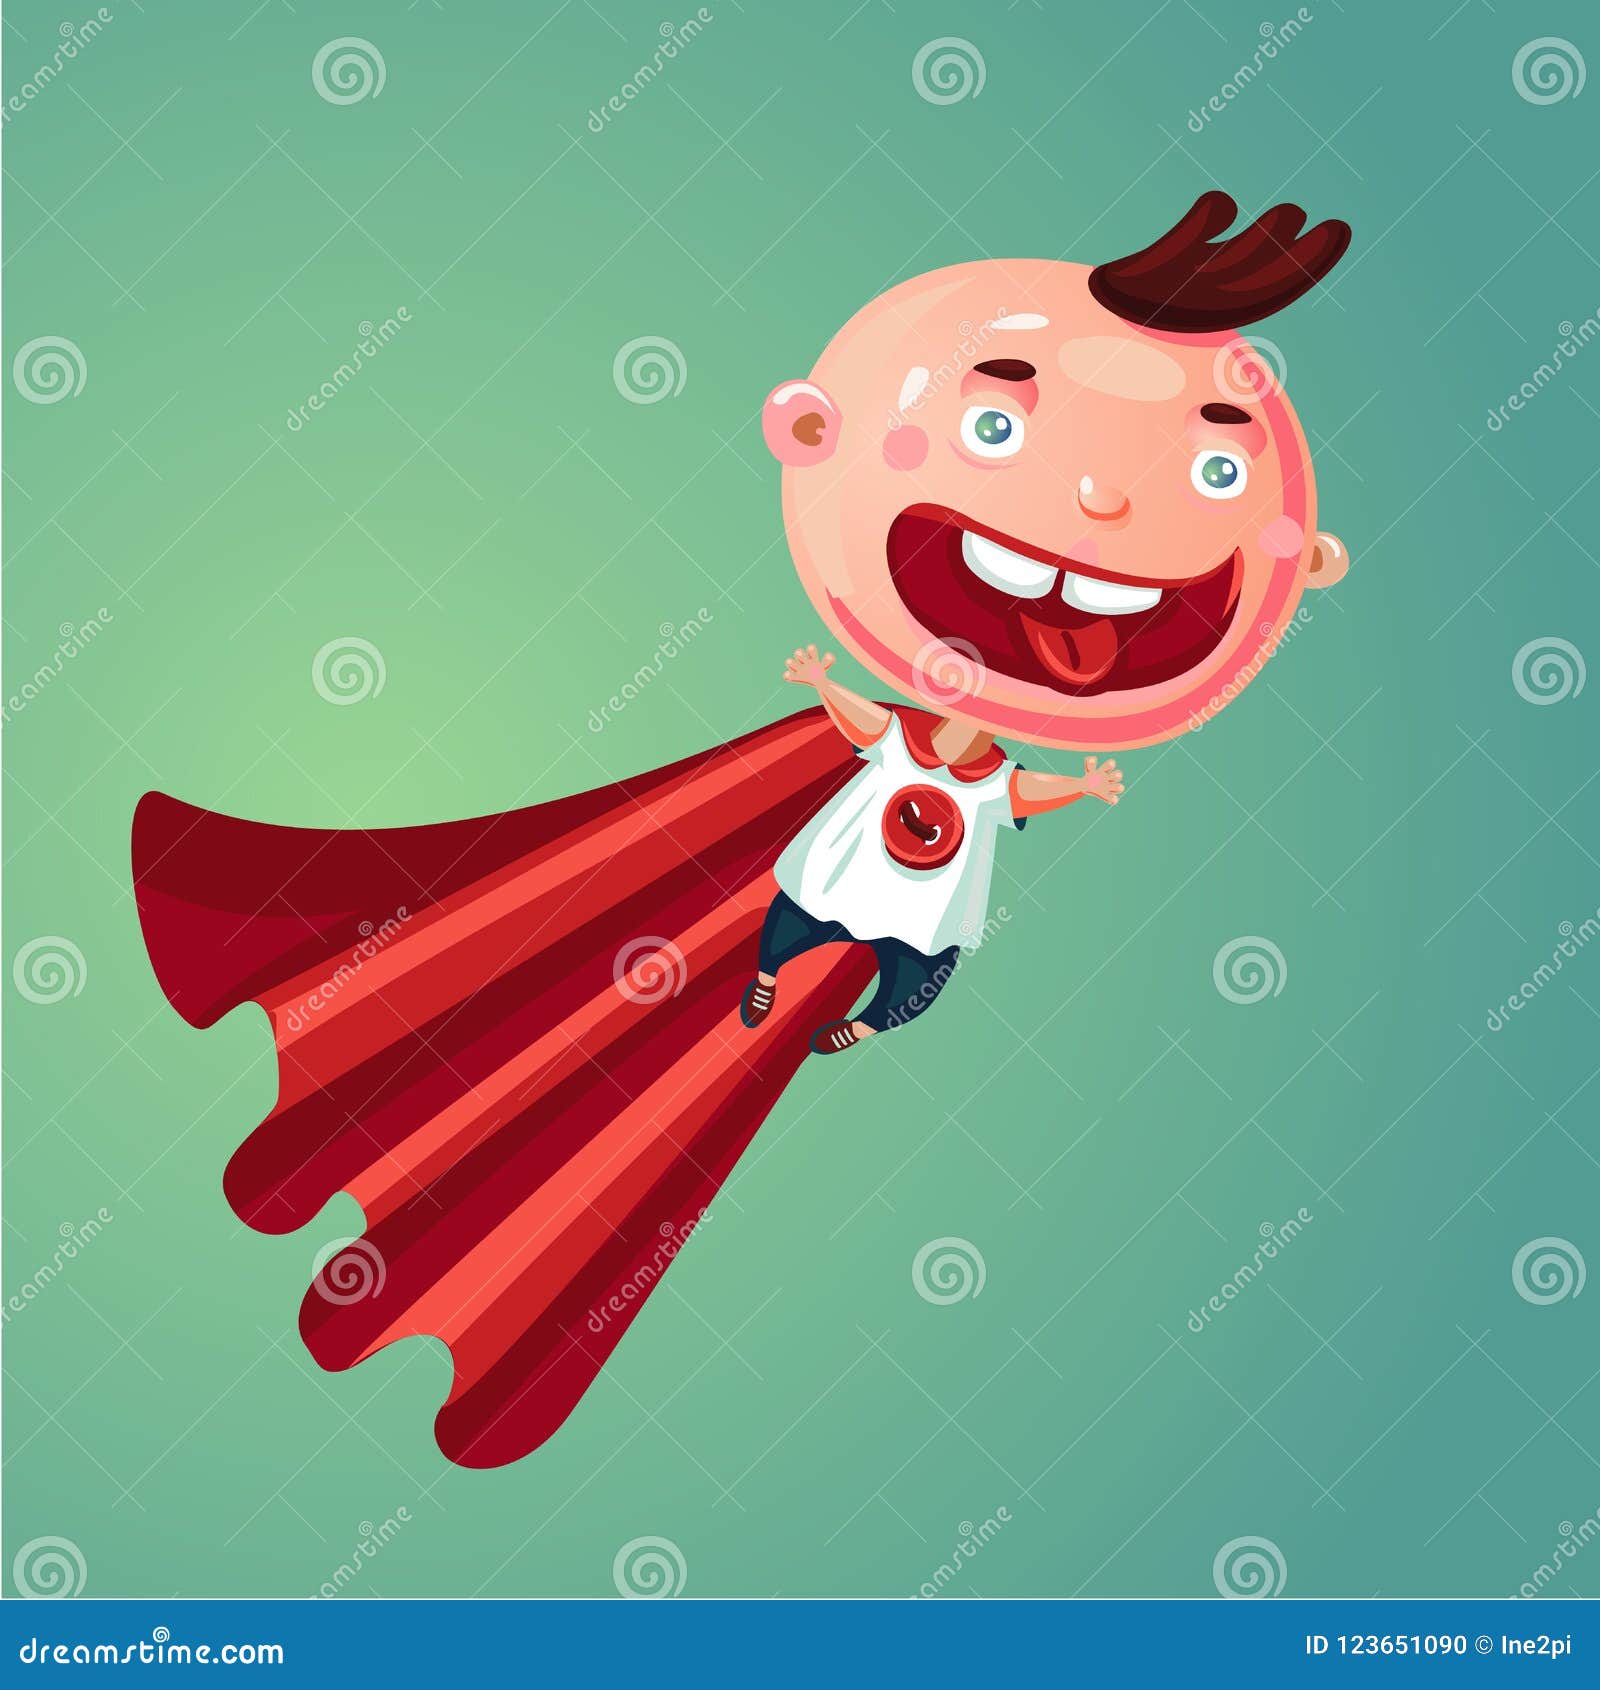 https://thumbs.dreamstime.com/z/super-boy-wonder-baby-funny-little-child-super-hero-suit-humor-cartoon-illustration-wonder-baby-super-boy-funny-little-child-123651090.jpg